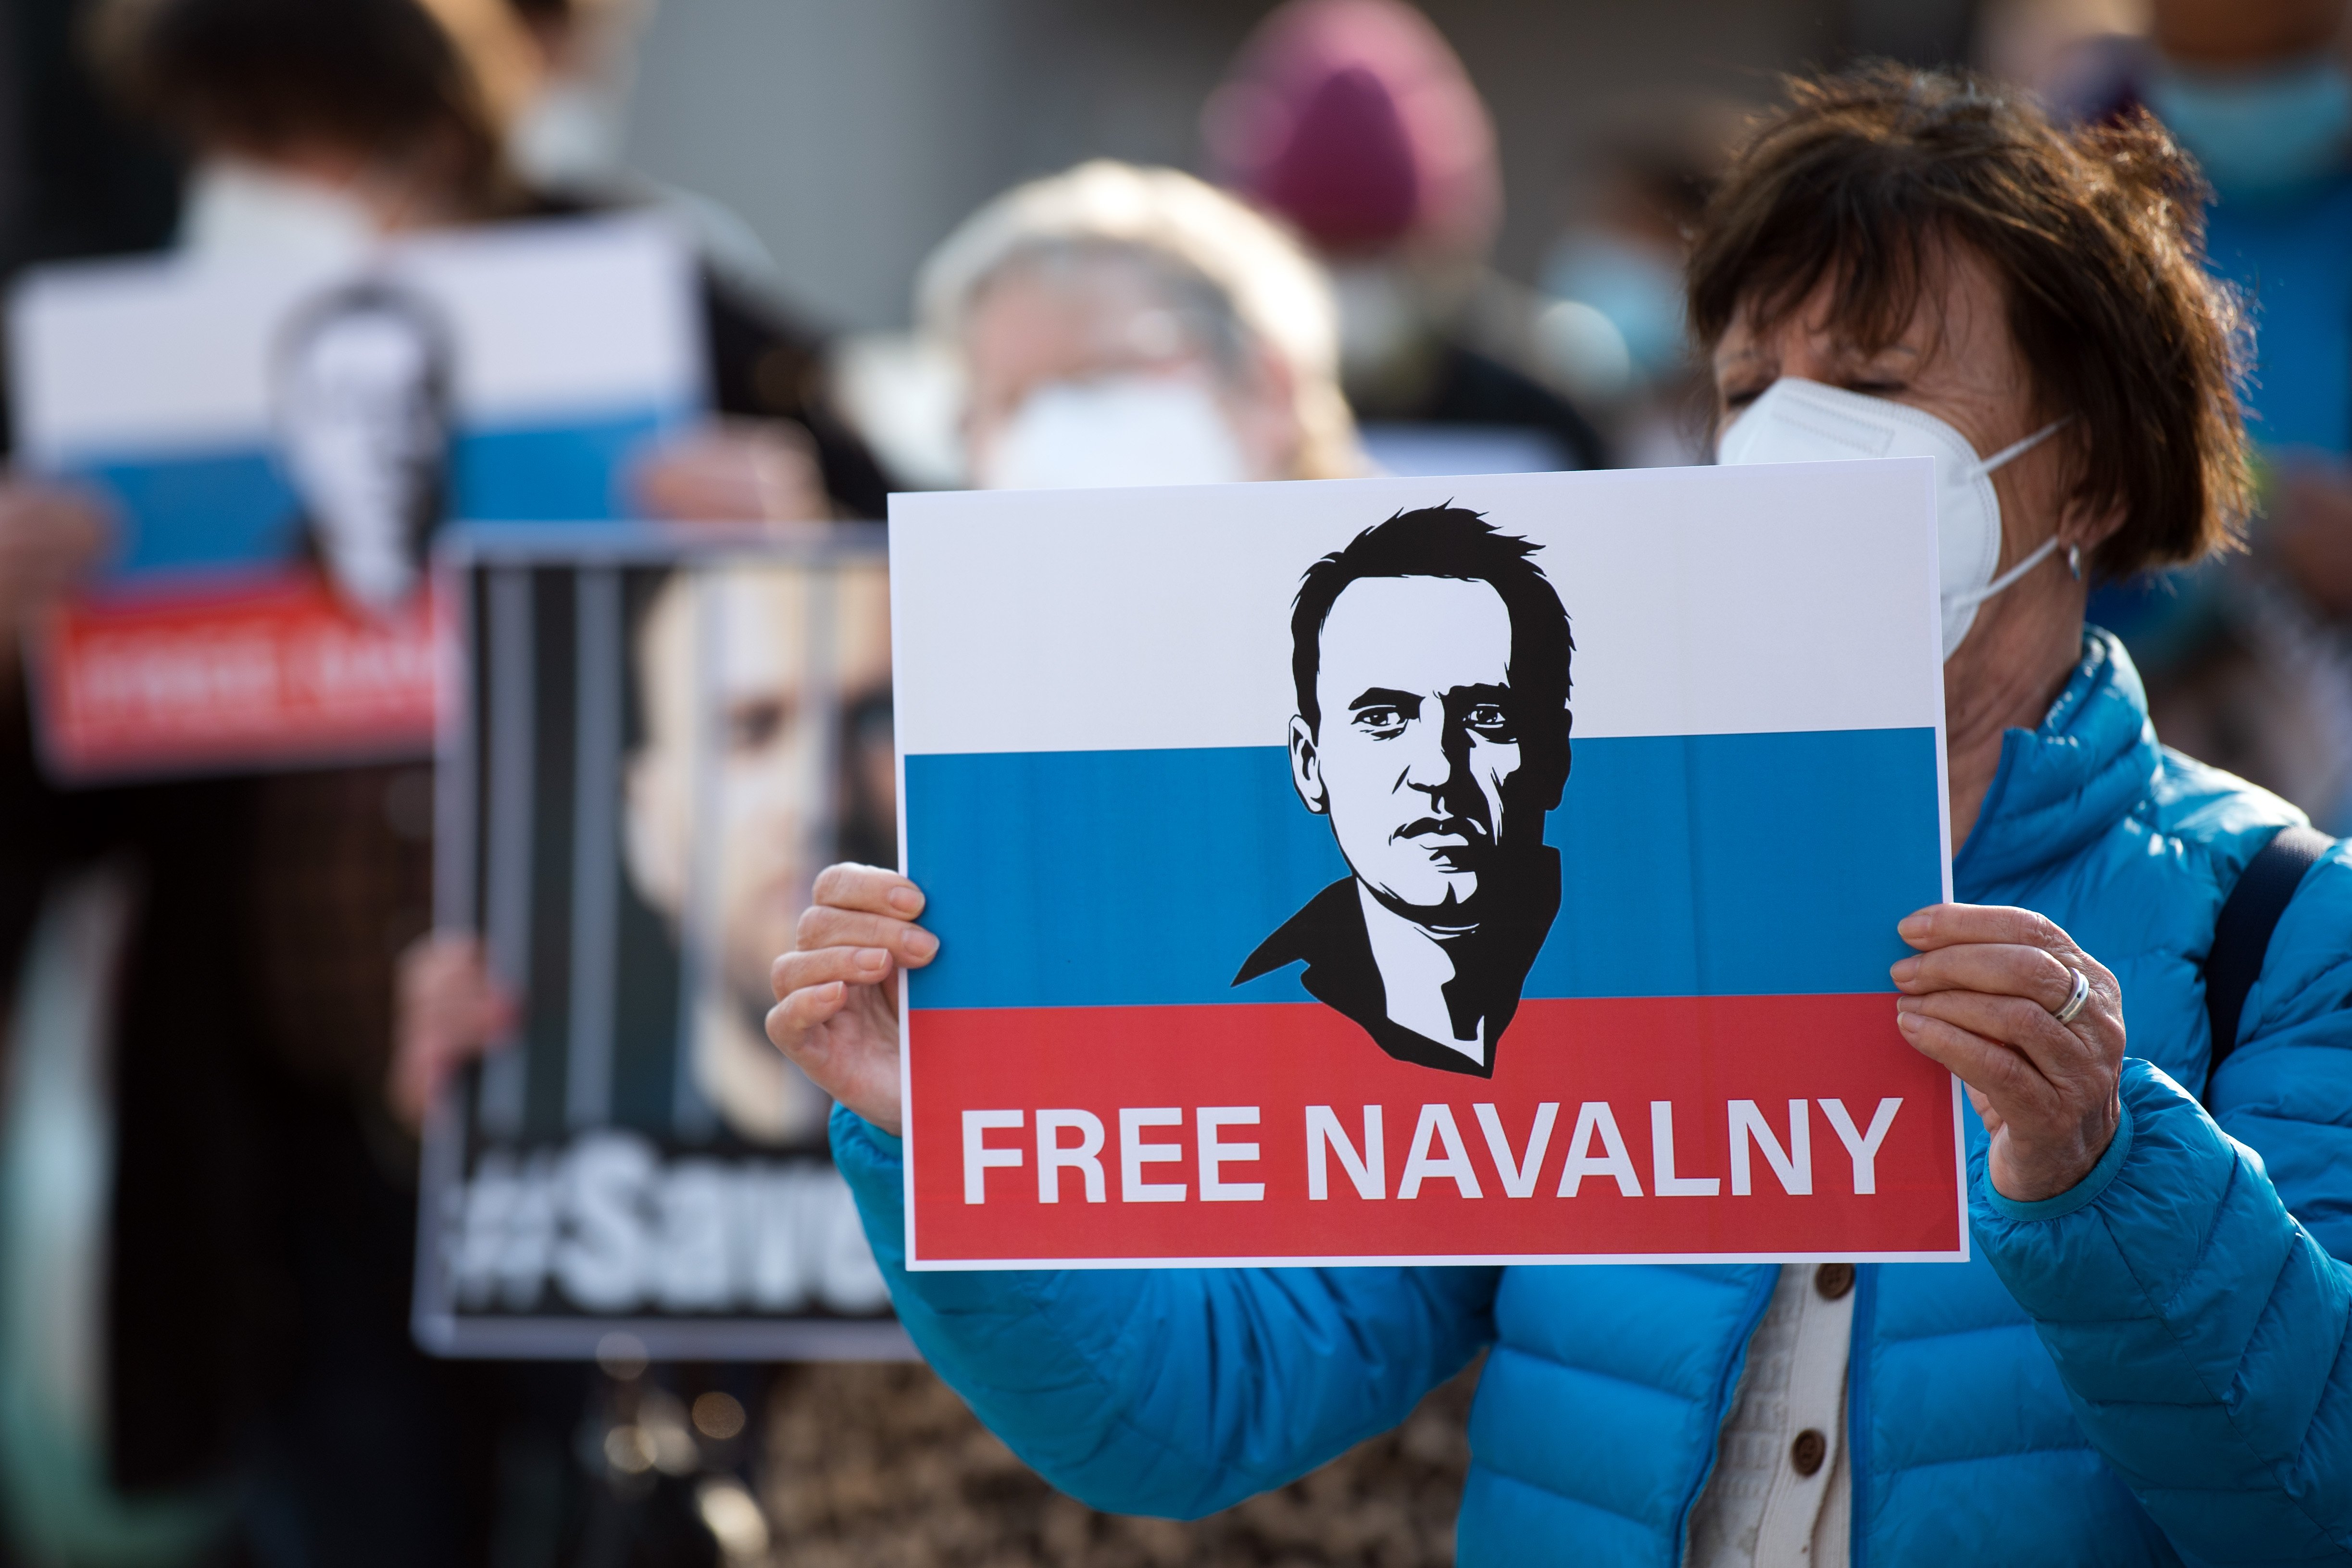 Free Nalvani Europa Press